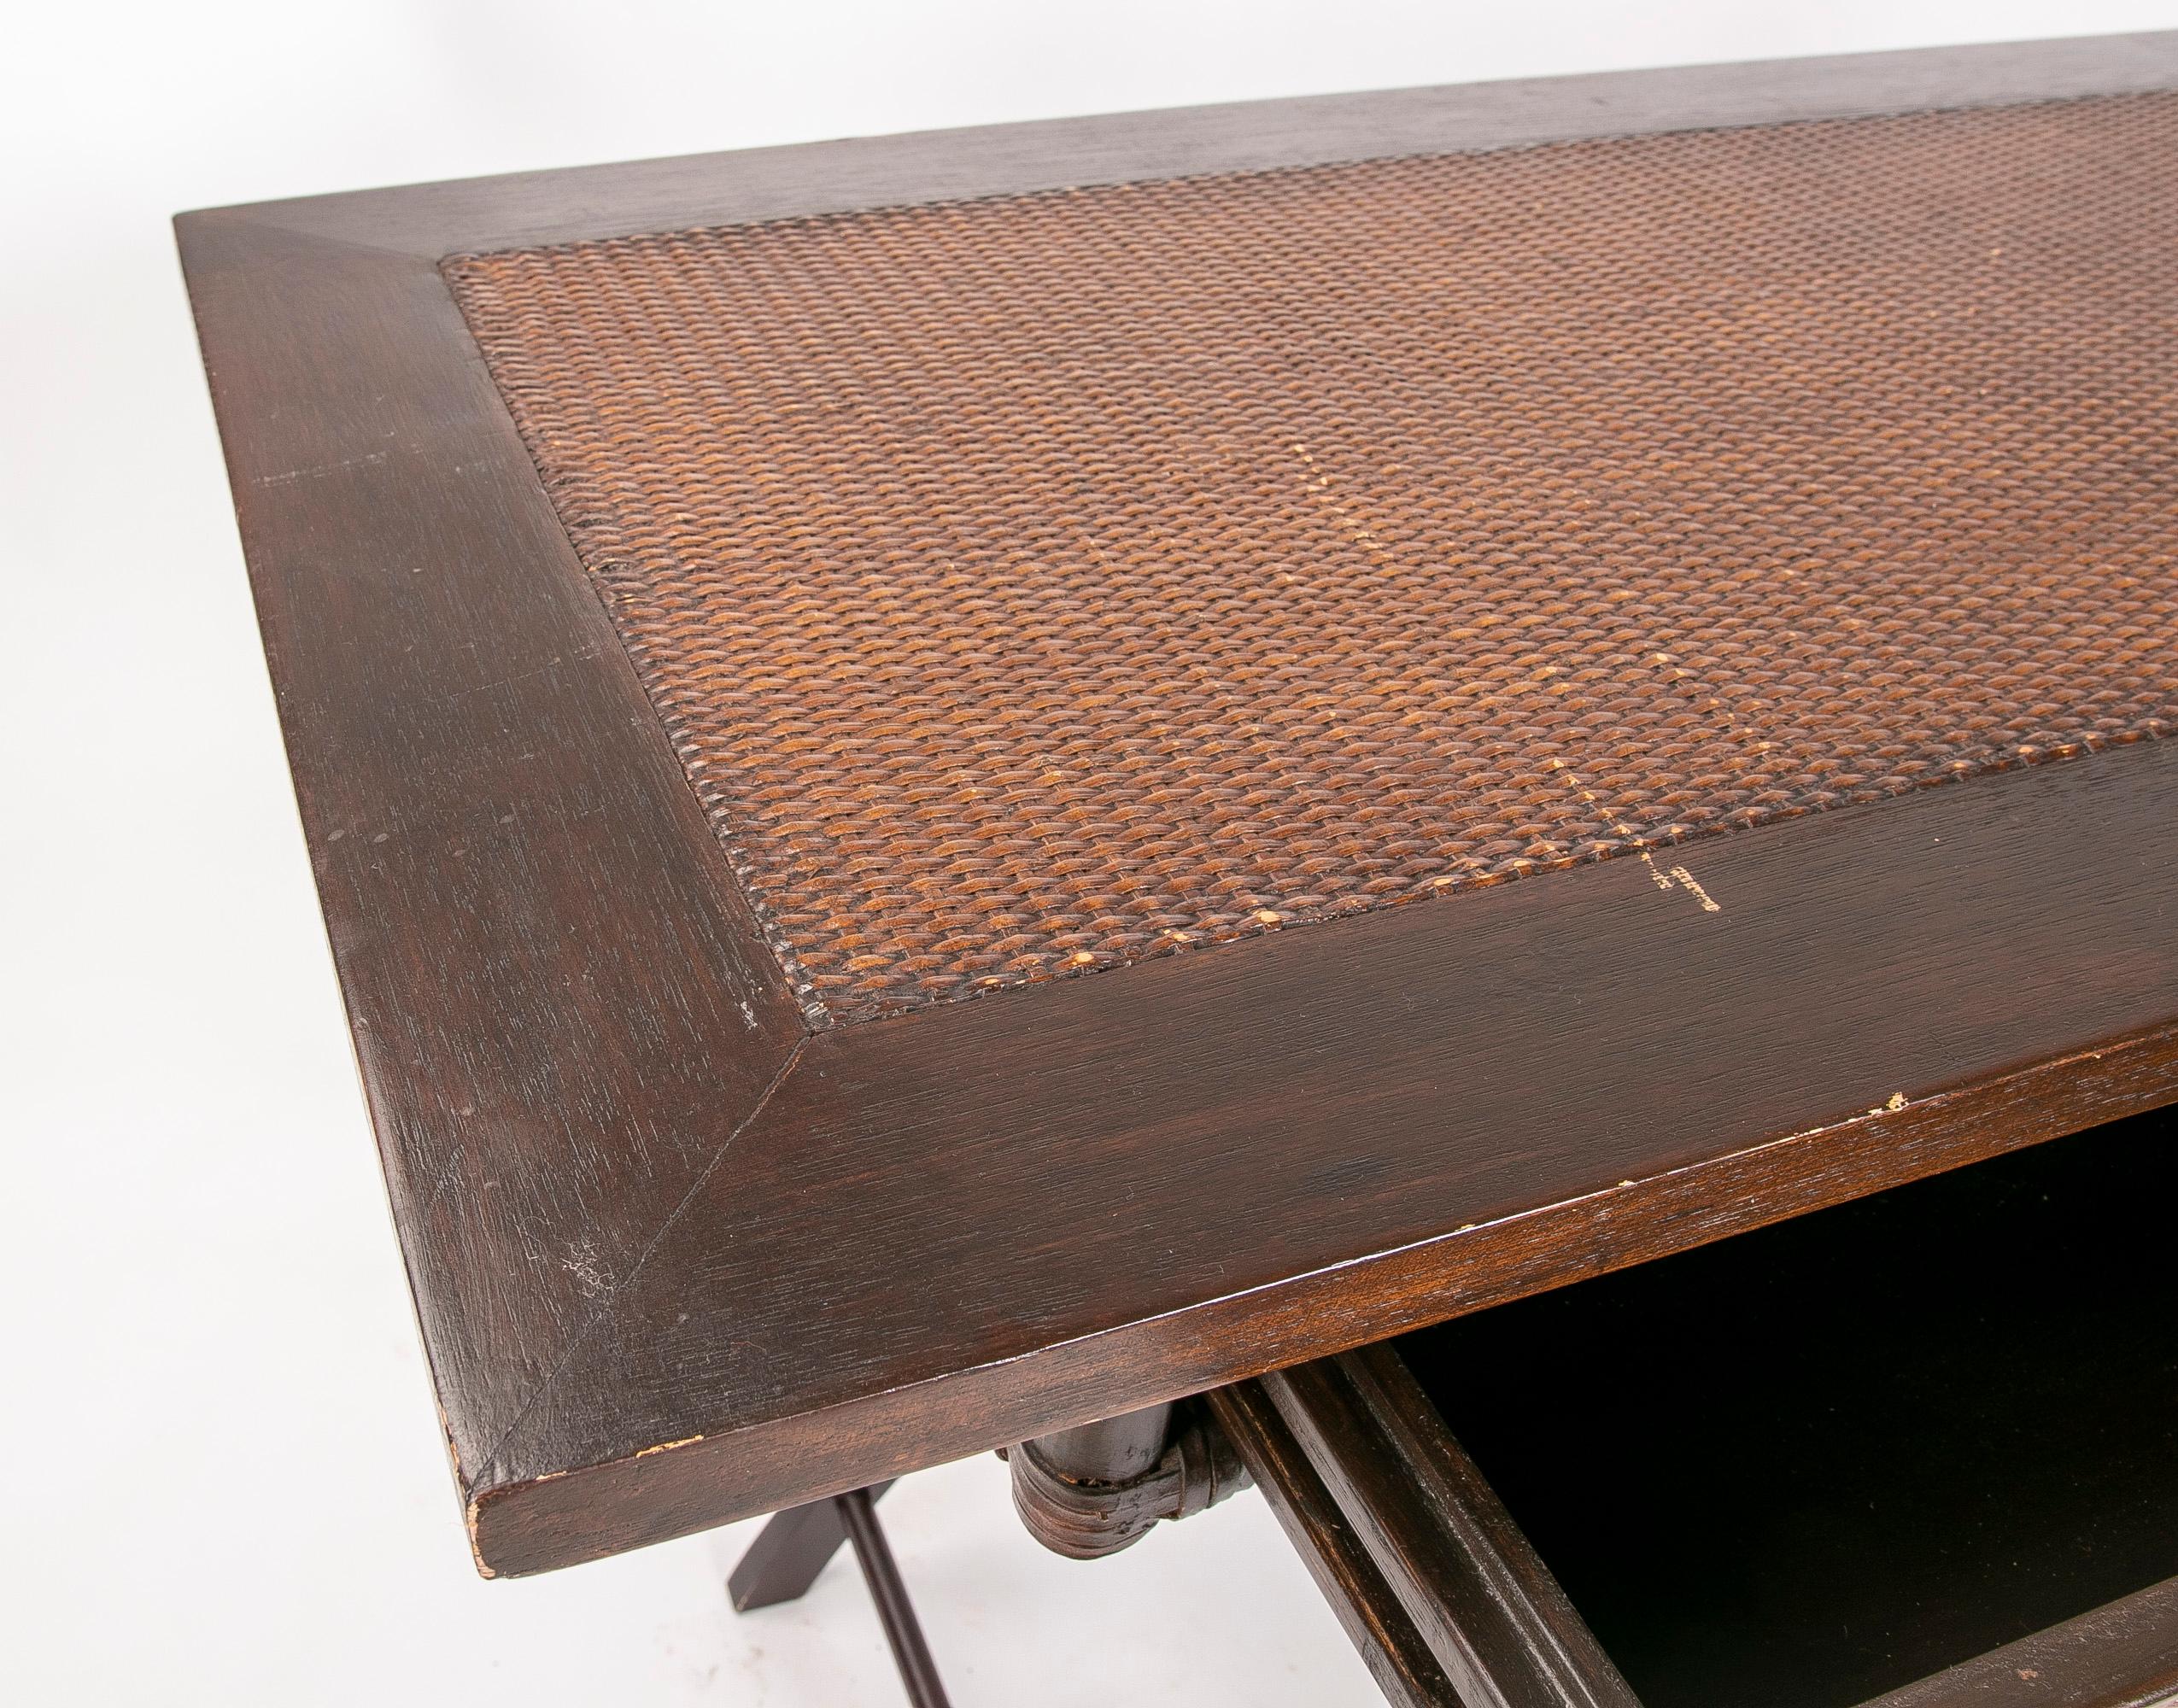 Espagnol Table pliante en bois et osier avec tiroir frontal en vente